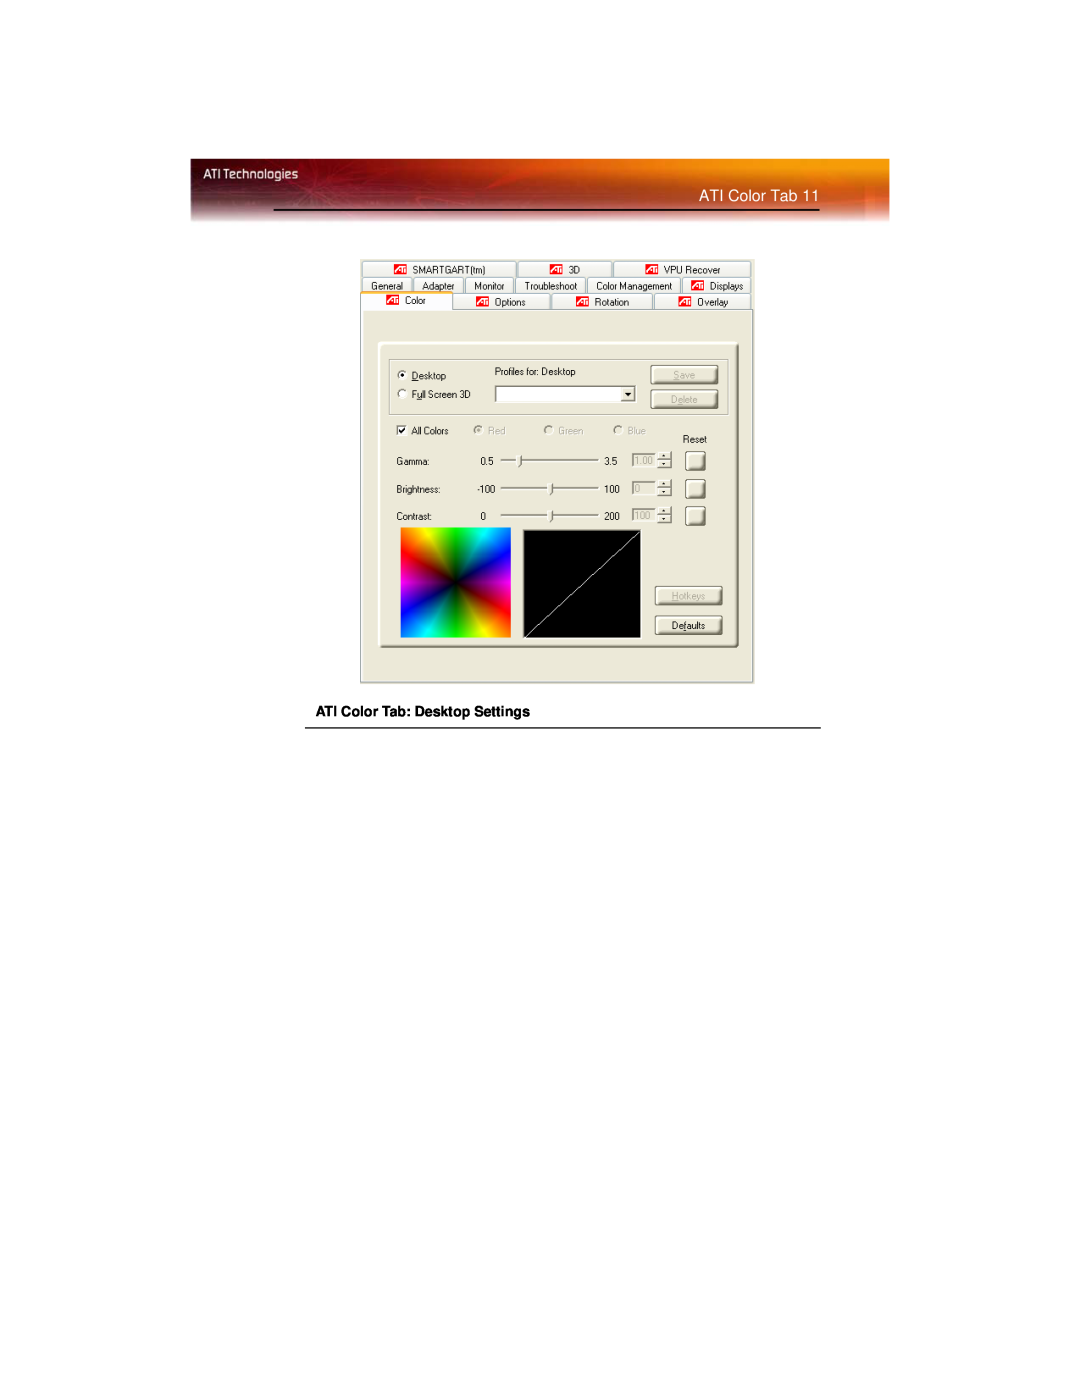 ATI Technologies X600 manual ATI Color Tab Desktop Settings 